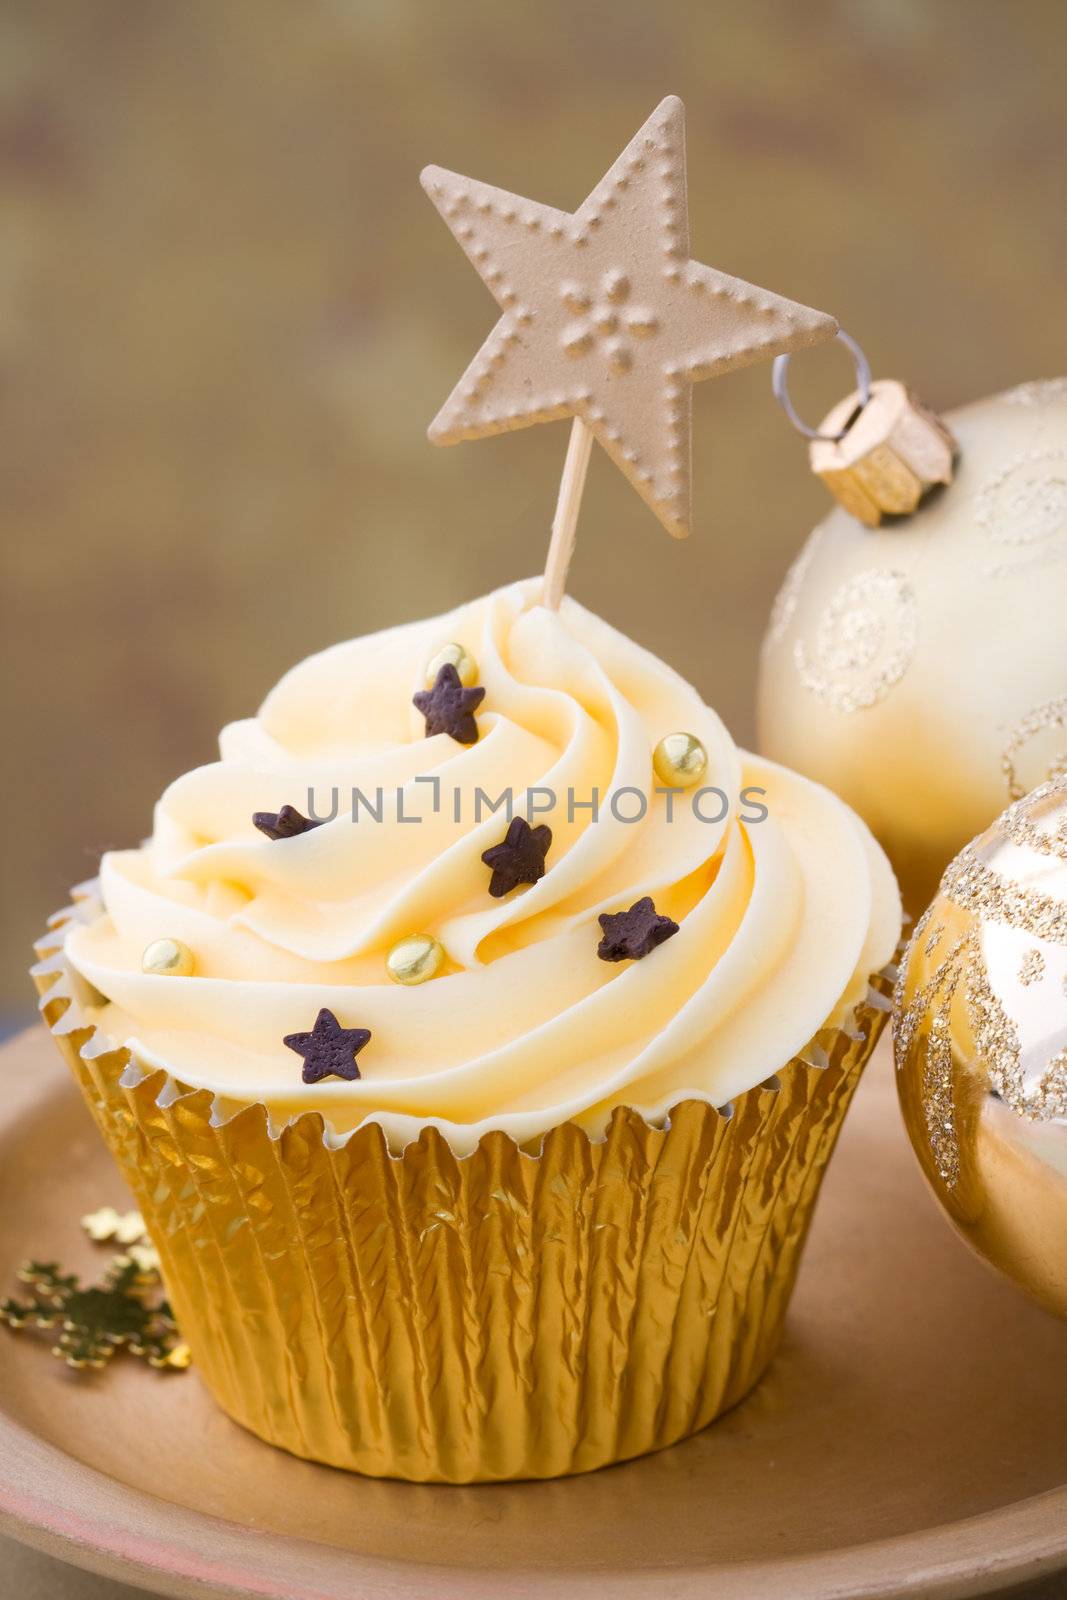 Christmas cupcake by RuthBlack